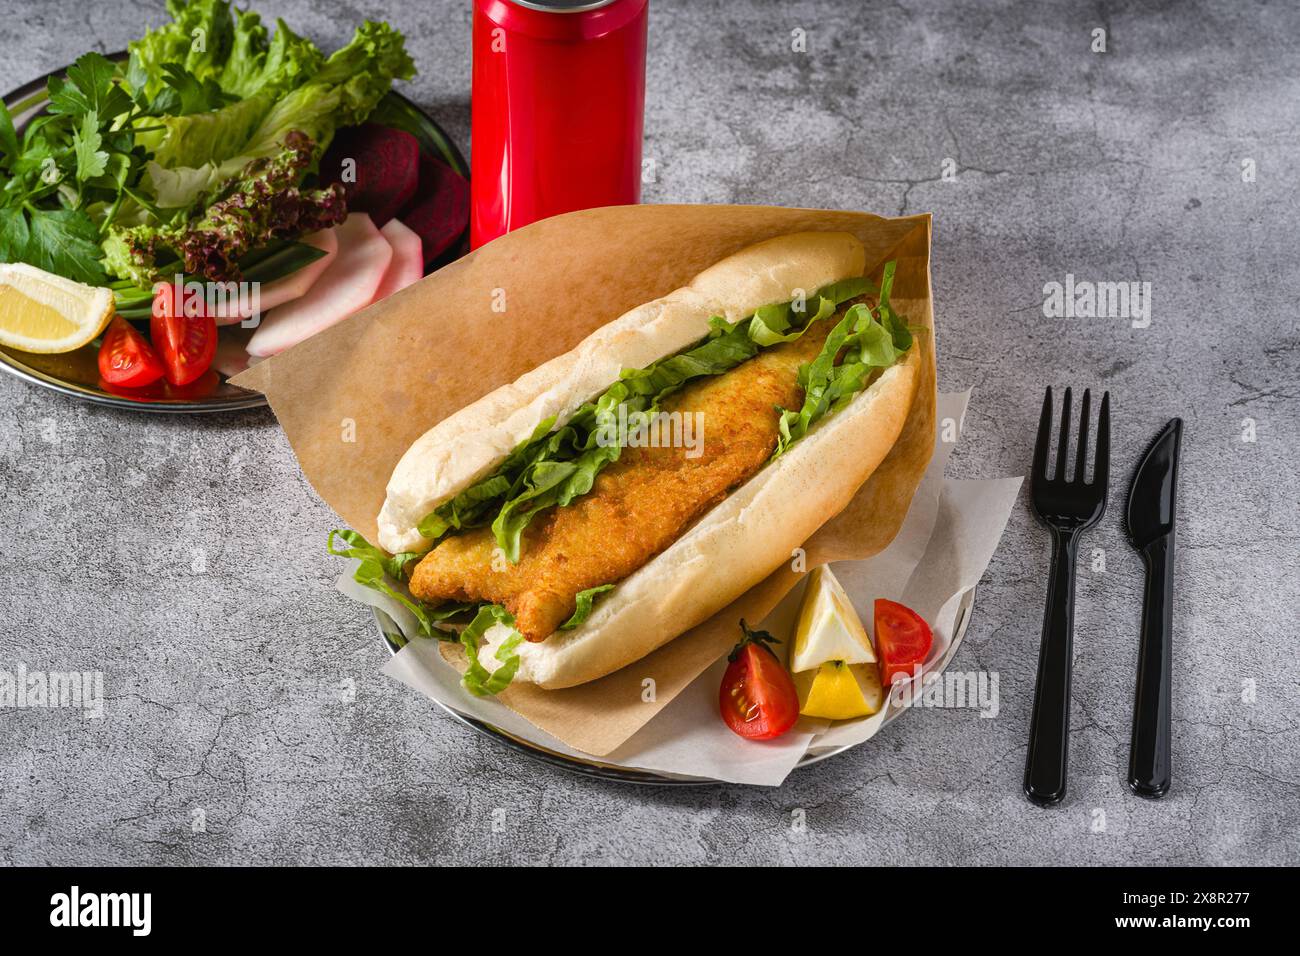 Fried fish sandwich with greens on the stone table. Turkish name Balik Ekmek Stock Photo